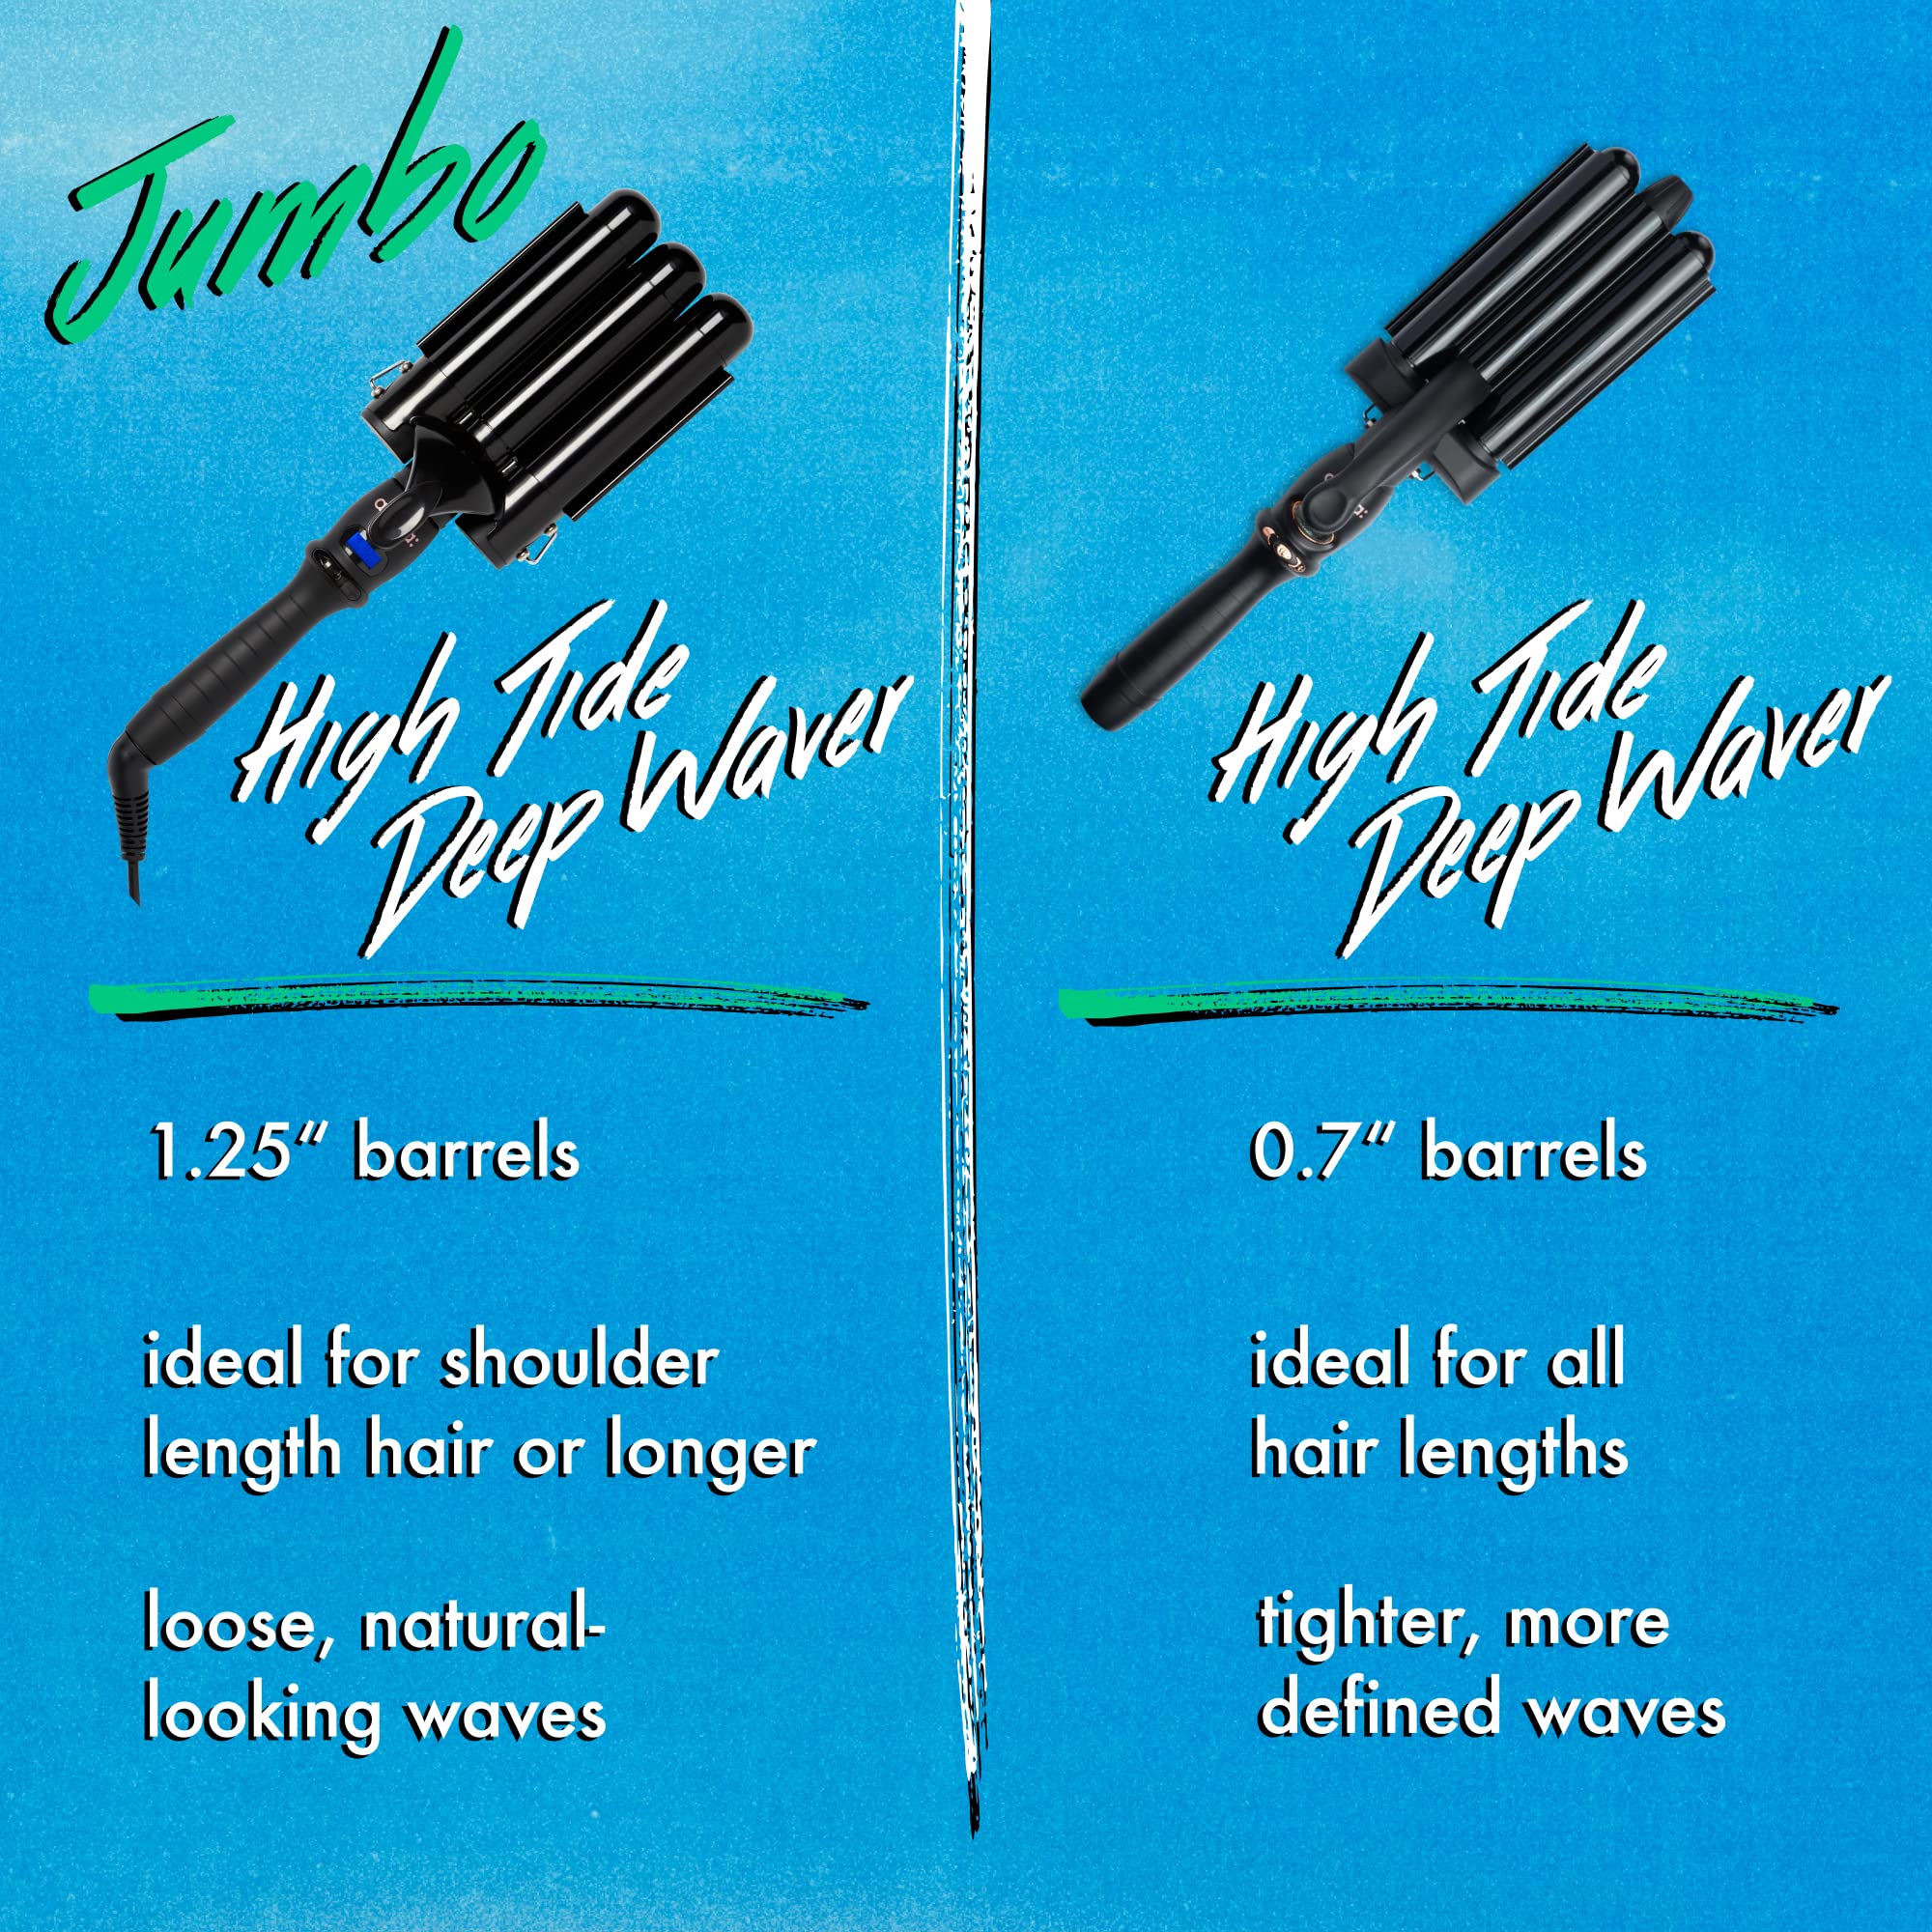 High Tide Jumbo Deep Hair Waver | amika